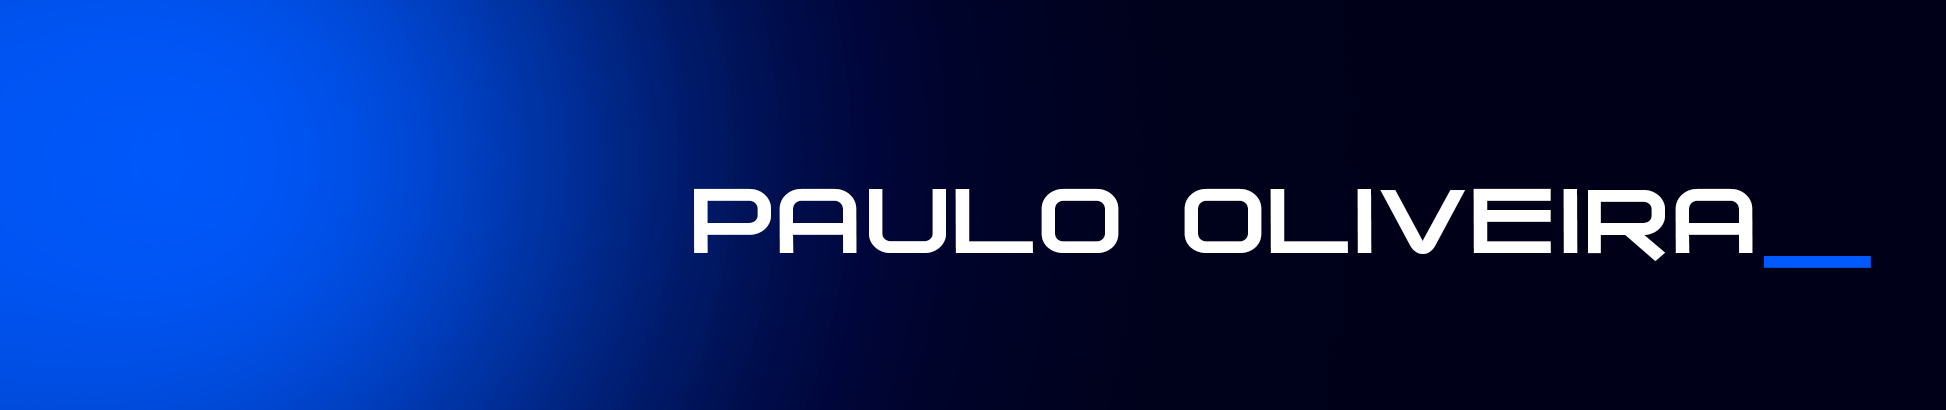 Paulo Oliveira's profile banner